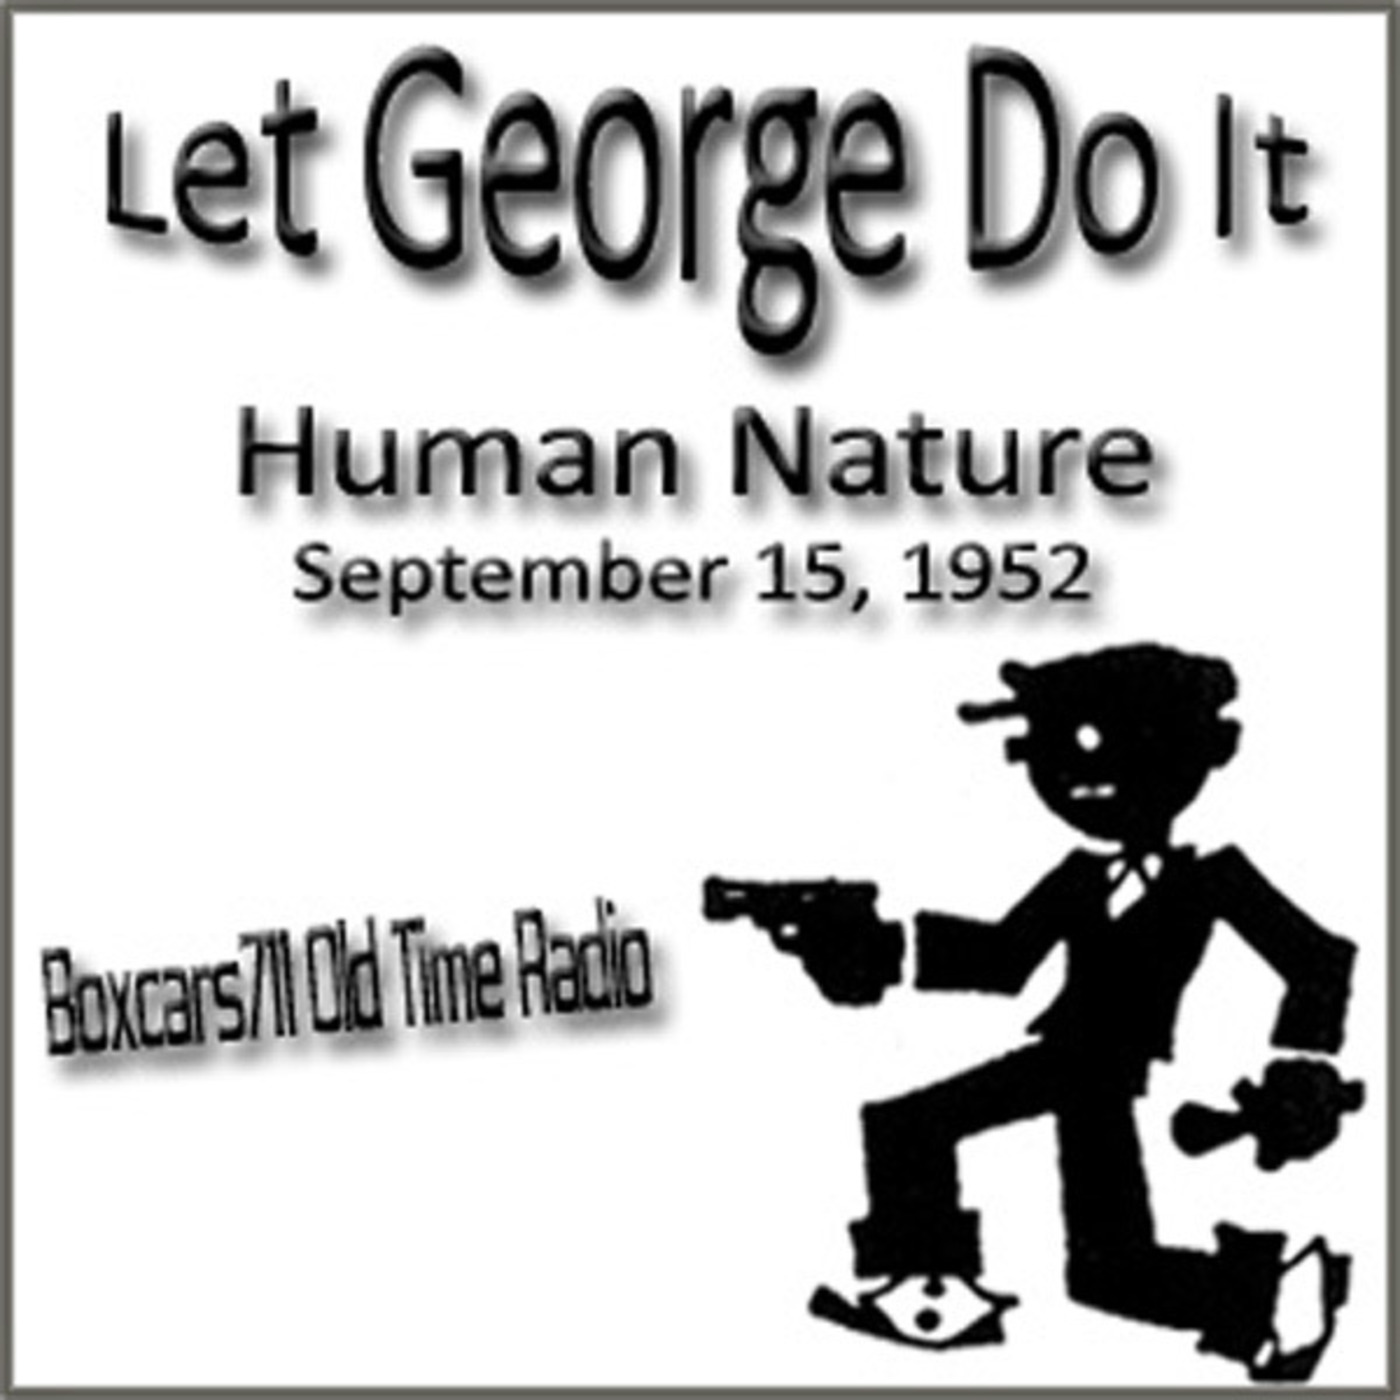 Episode 9469: Let George Do It - 